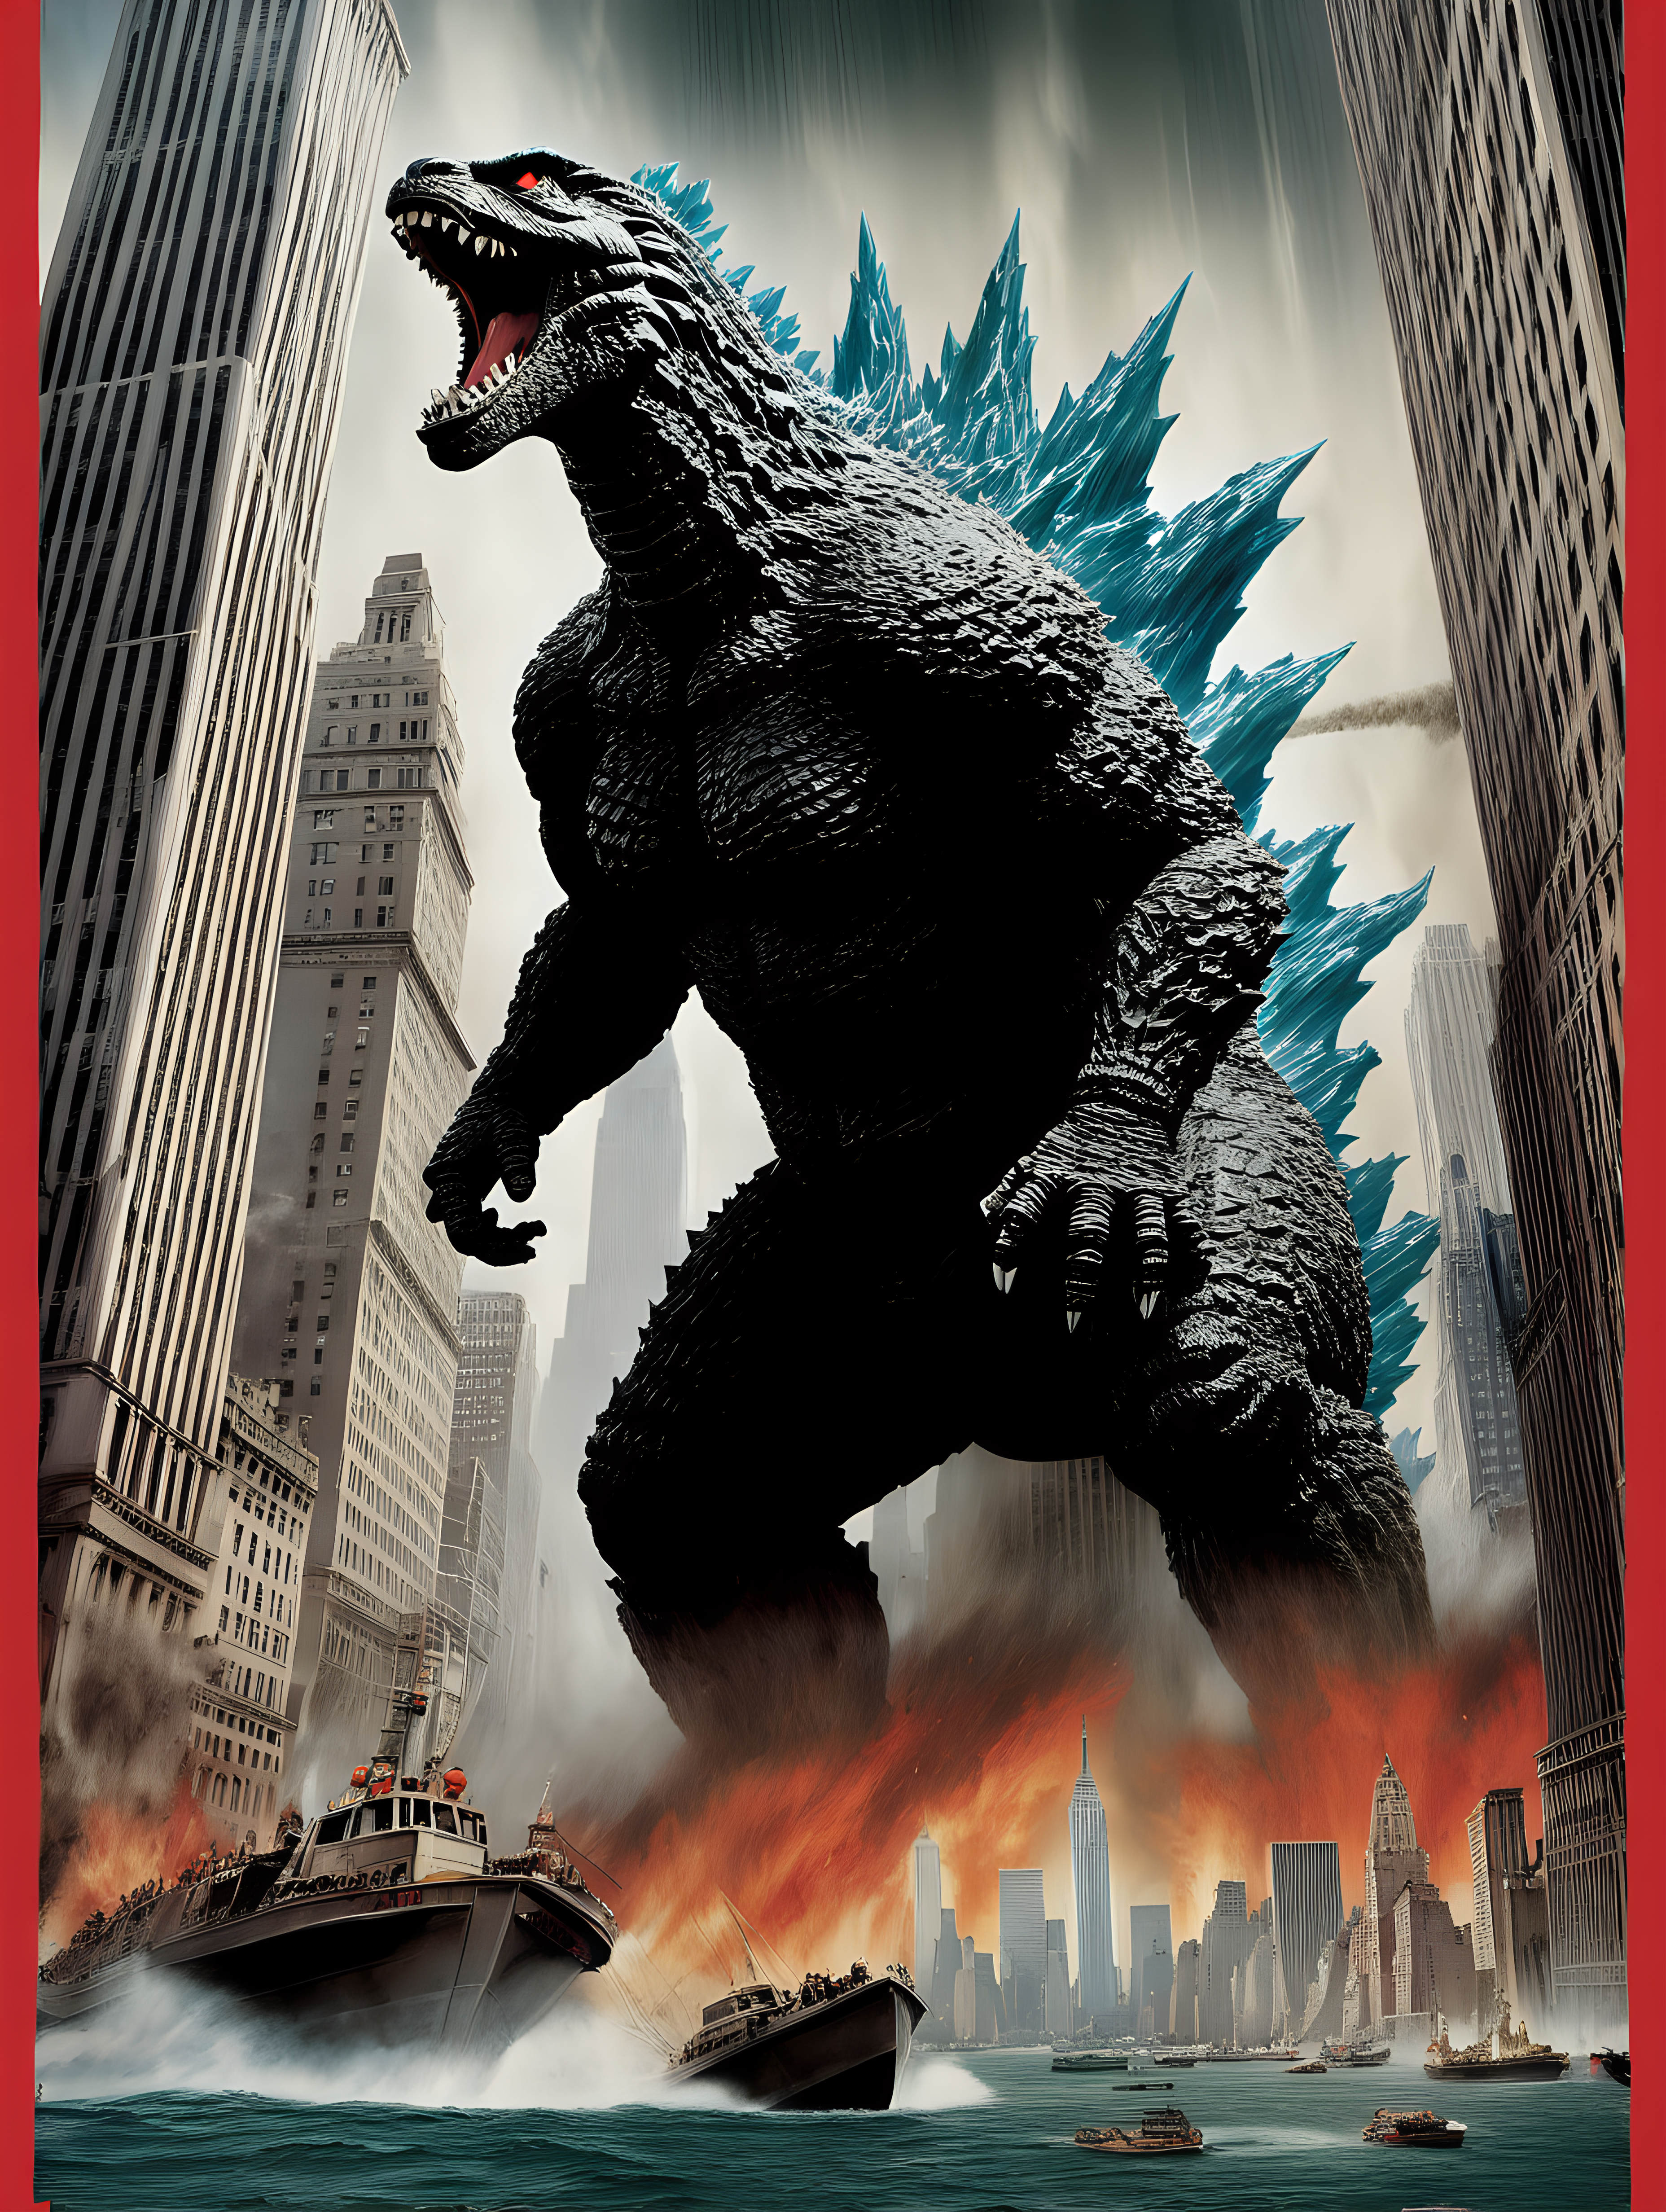 Movie poster of Godzilla destroying NYC